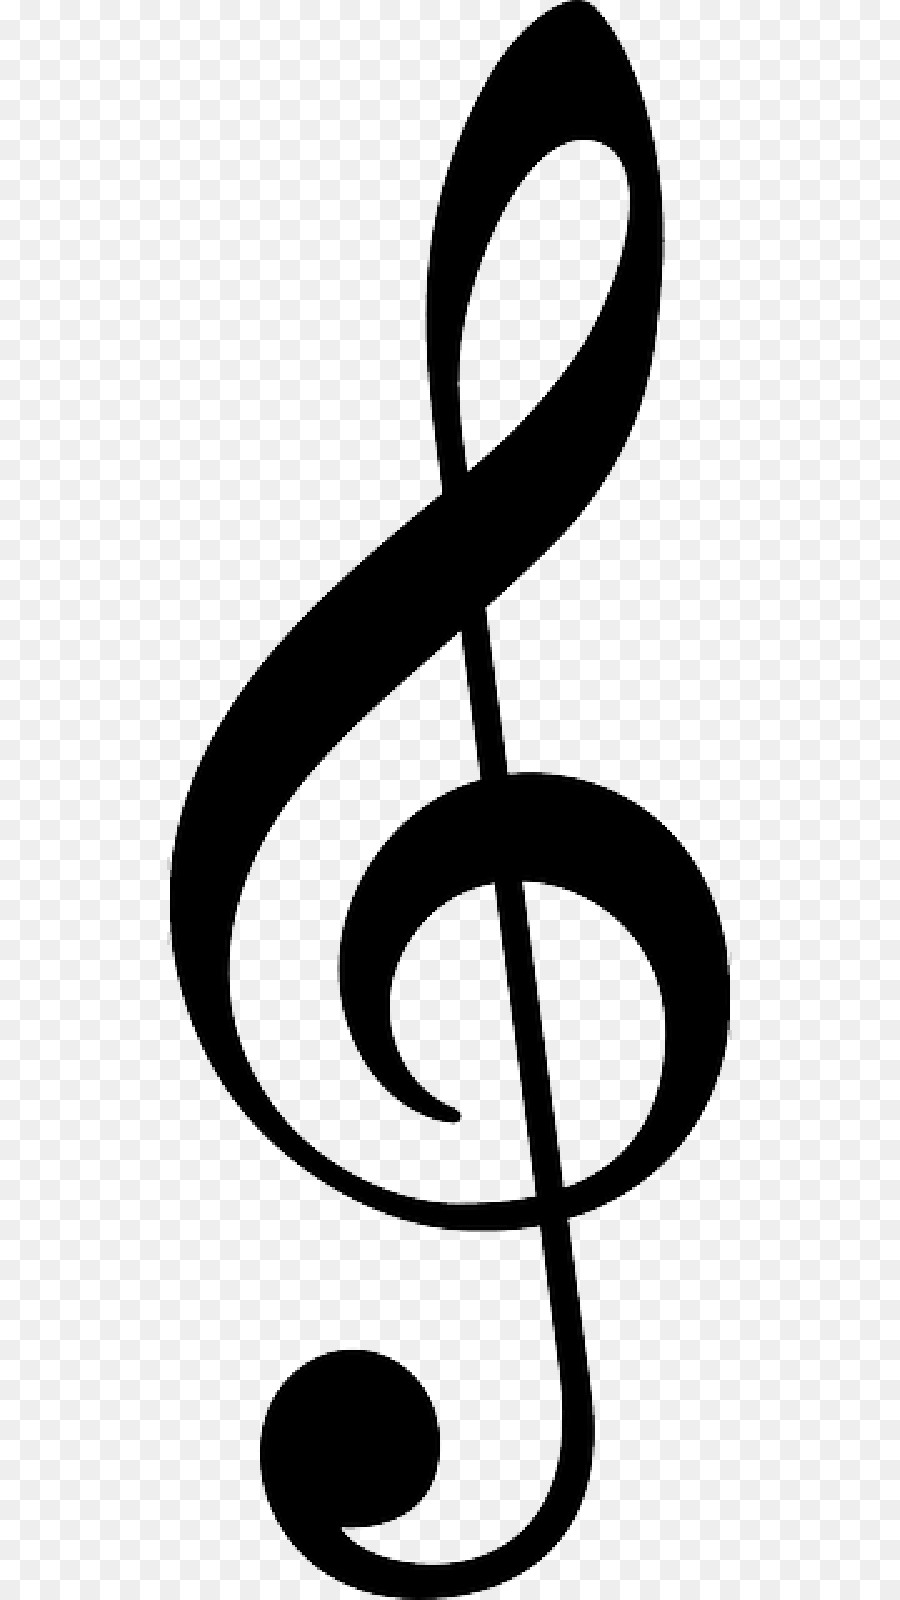 Treble clef musical symbol golden color Royalty Free Vector